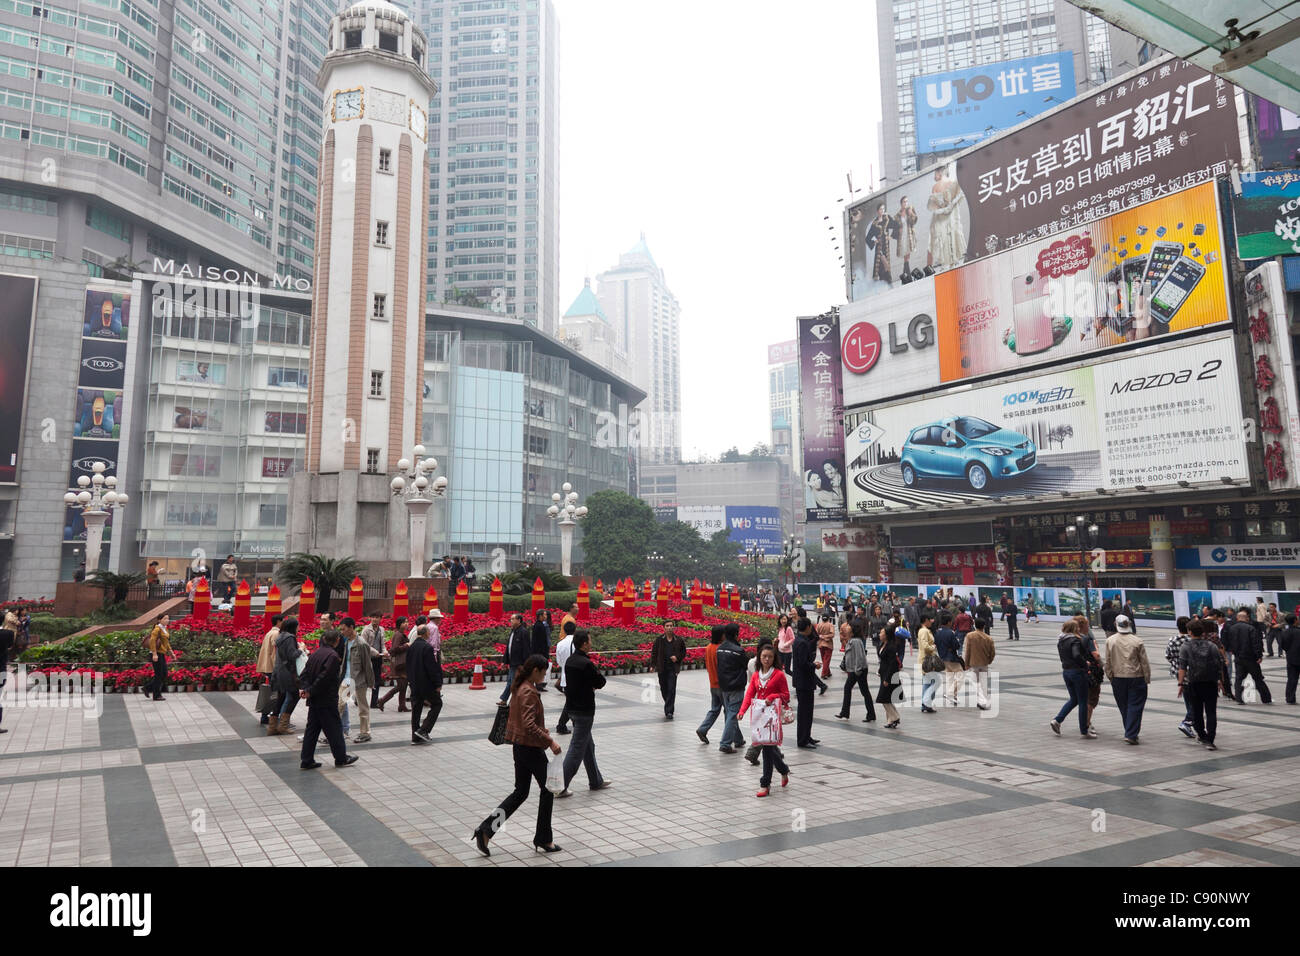 Plaza pública en Chongqing, peatones, anuncio y rascacielos, Chongqing, República Popular de China Foto de stock